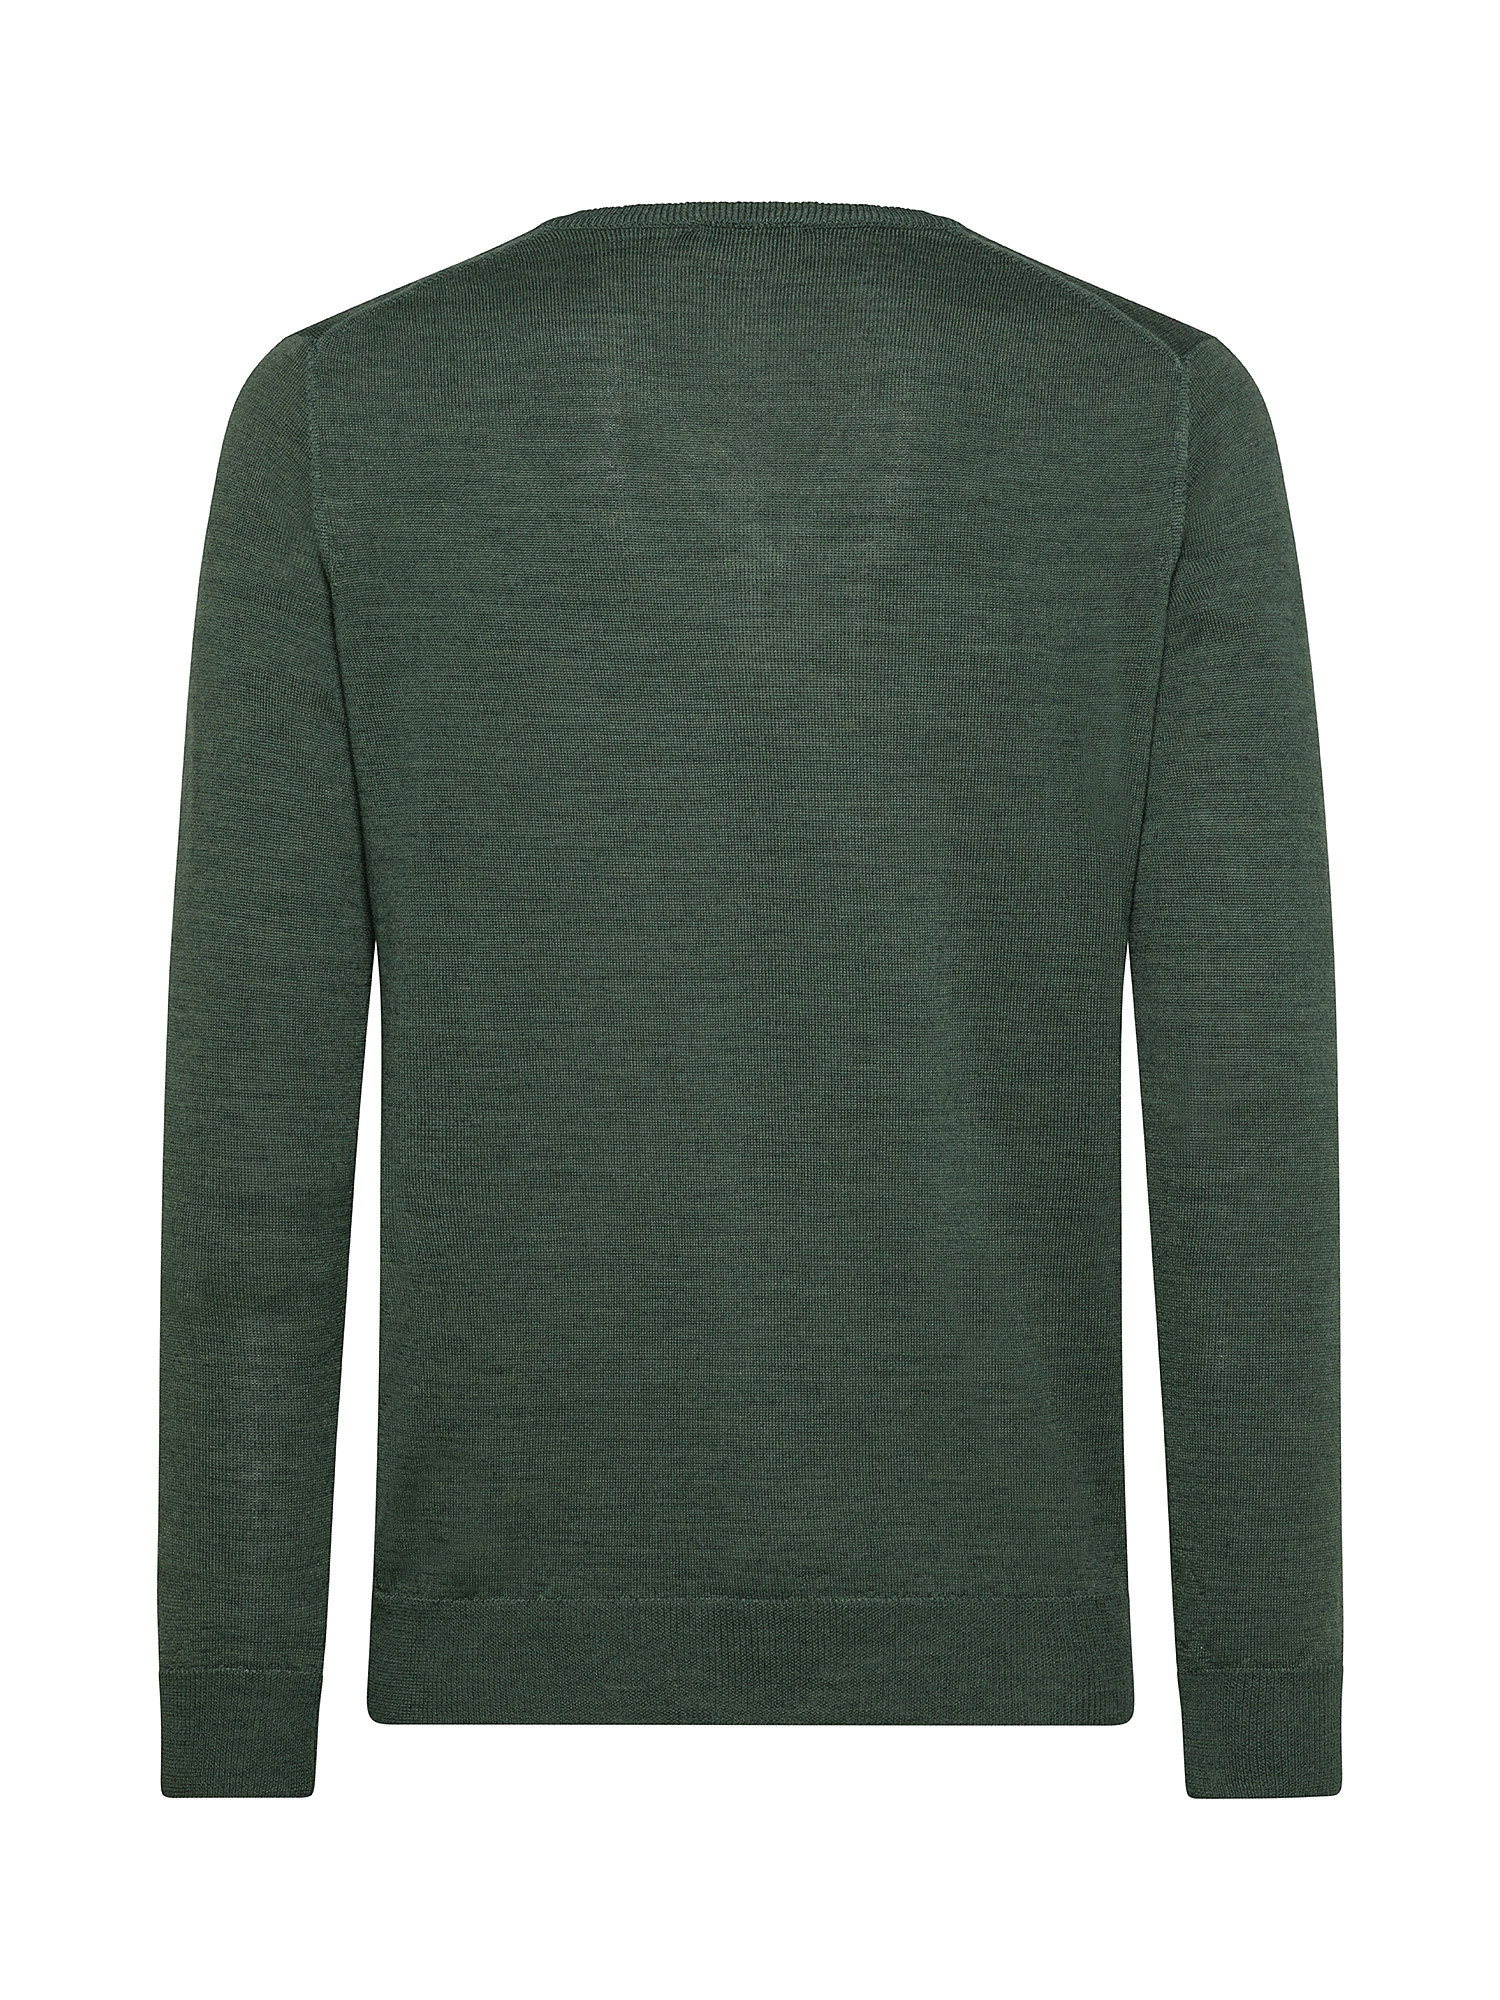 Merino Blend V-neck sweater - Machine washable, Green, large image number 1